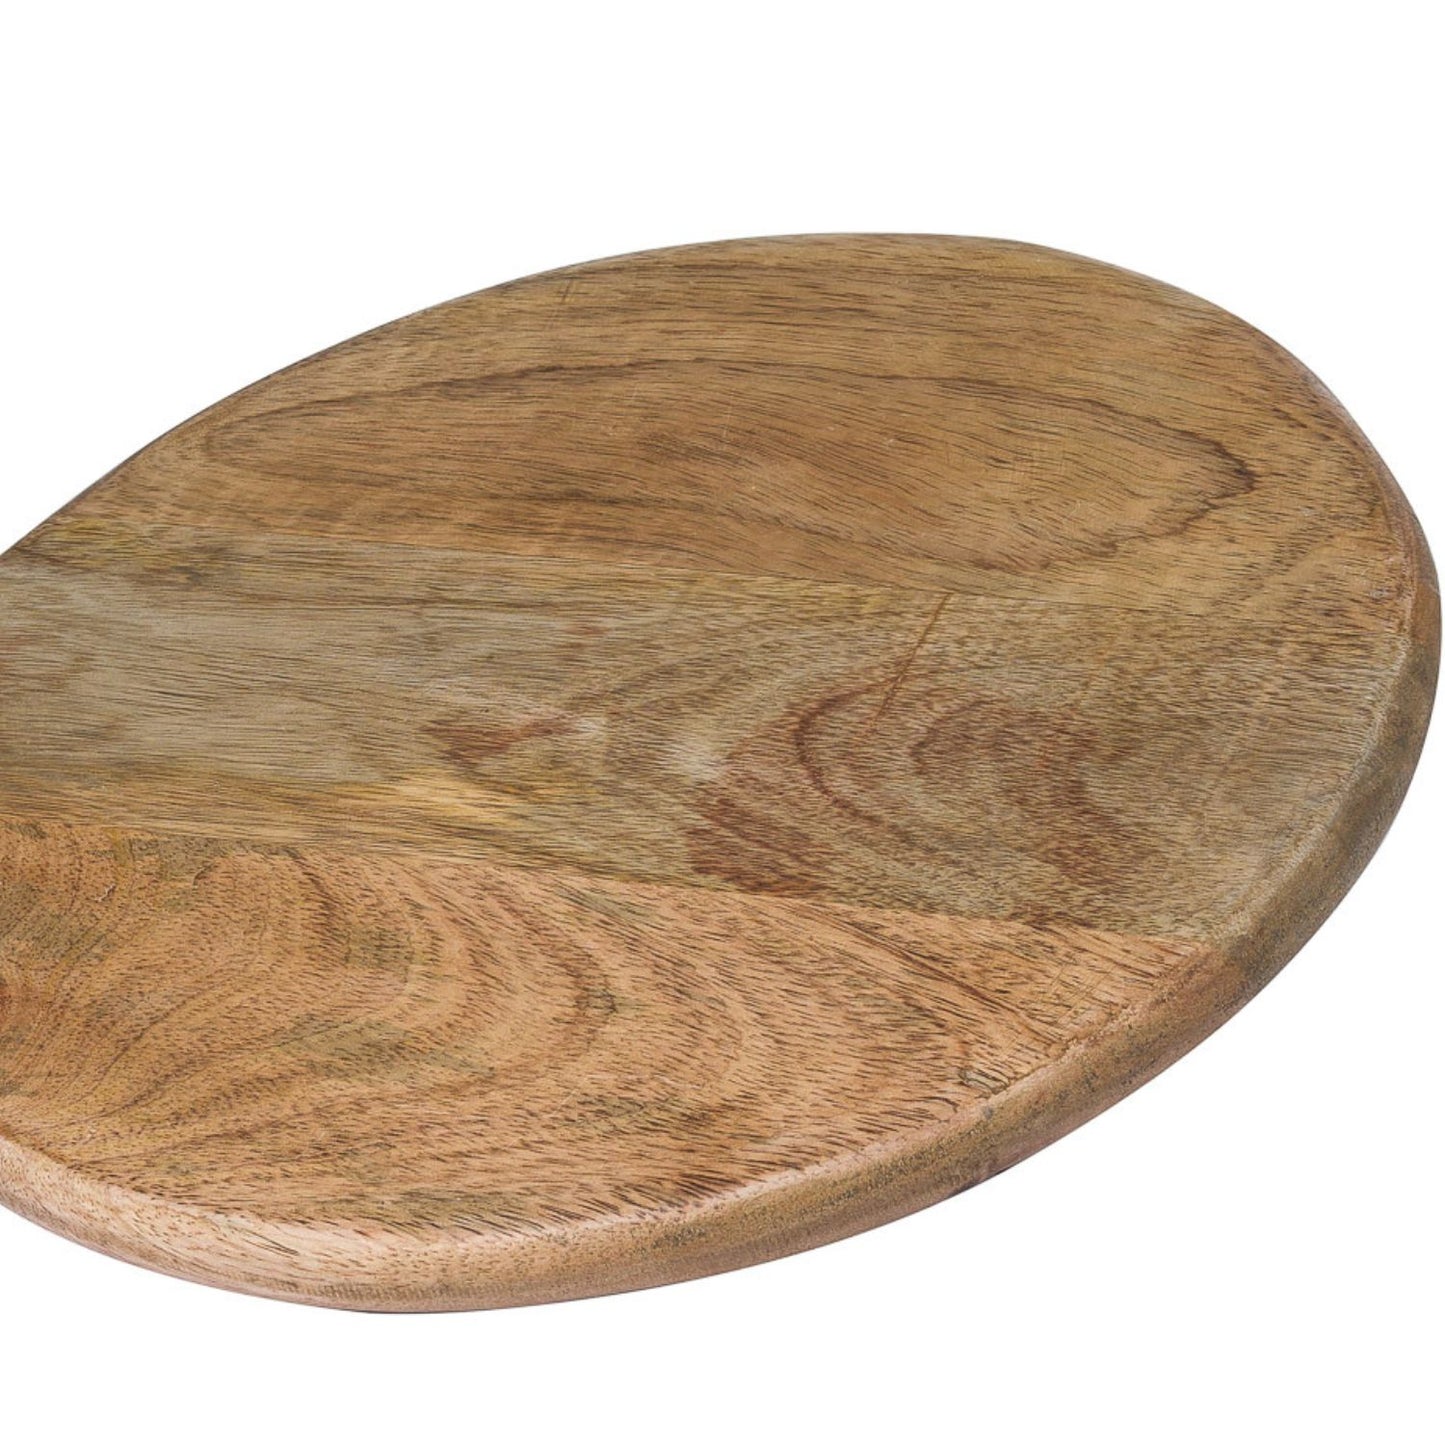 Large Circular Wooden Chopping Board